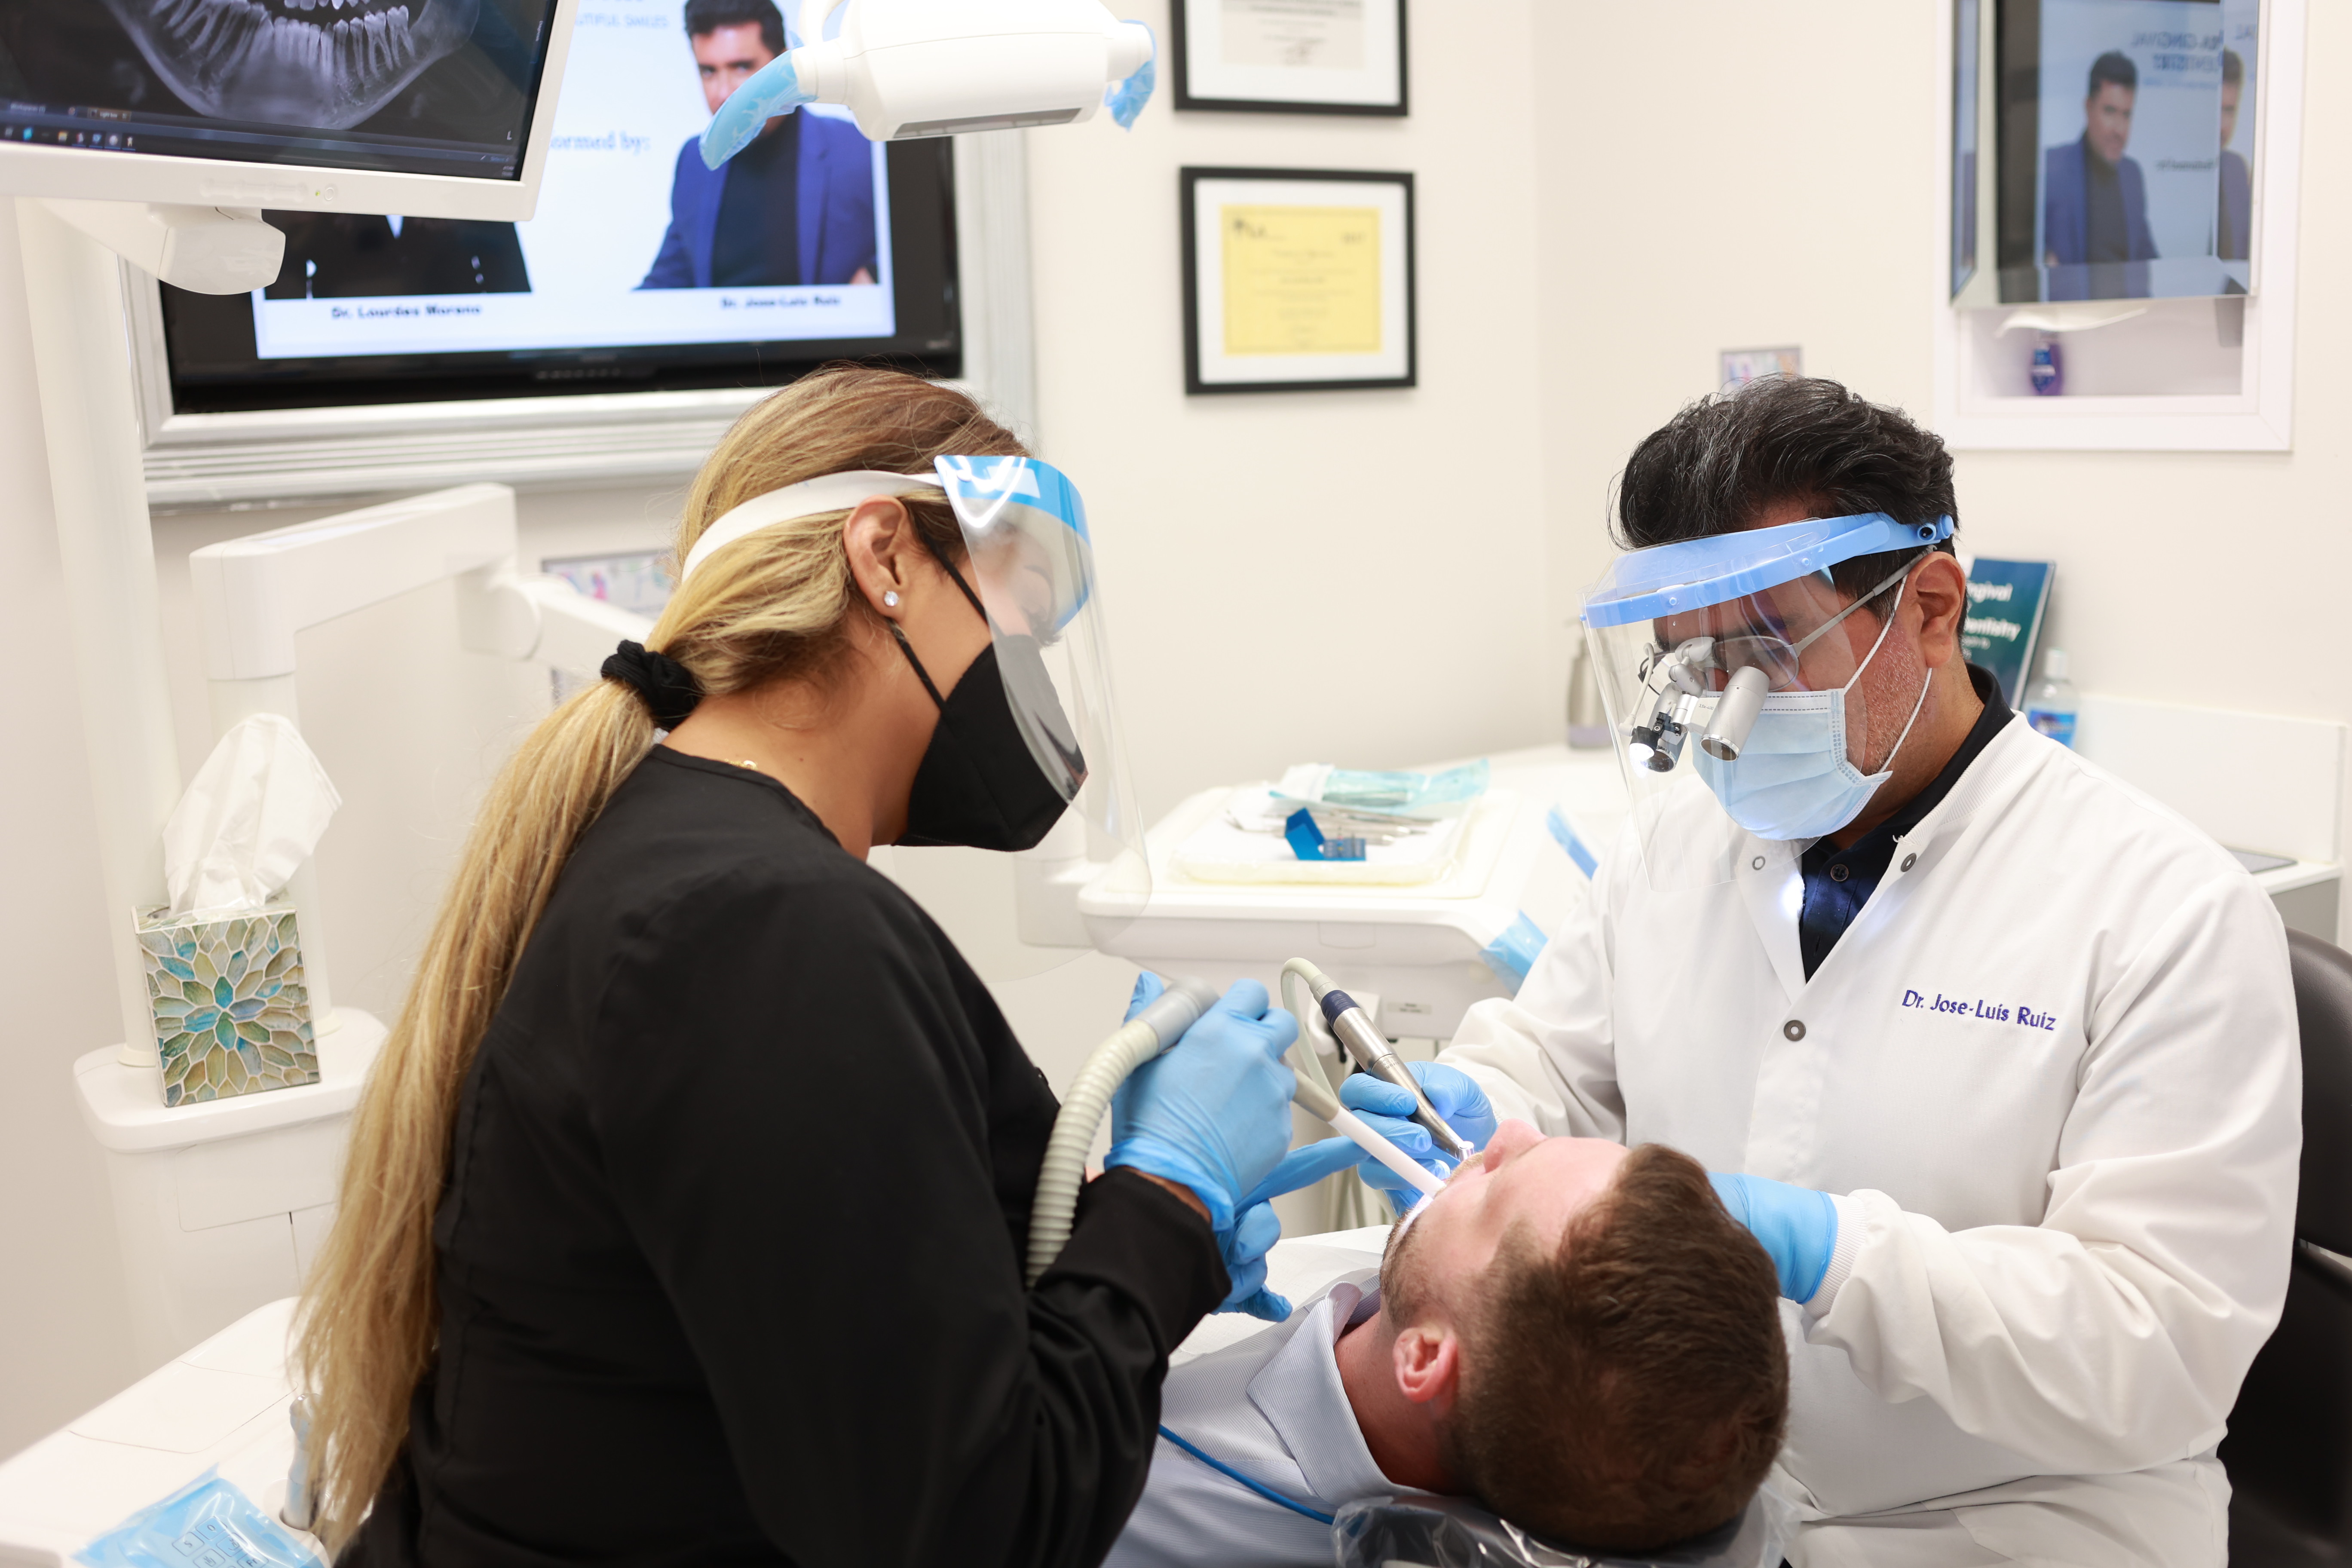 Burbank dentist and dental team member treating a patient